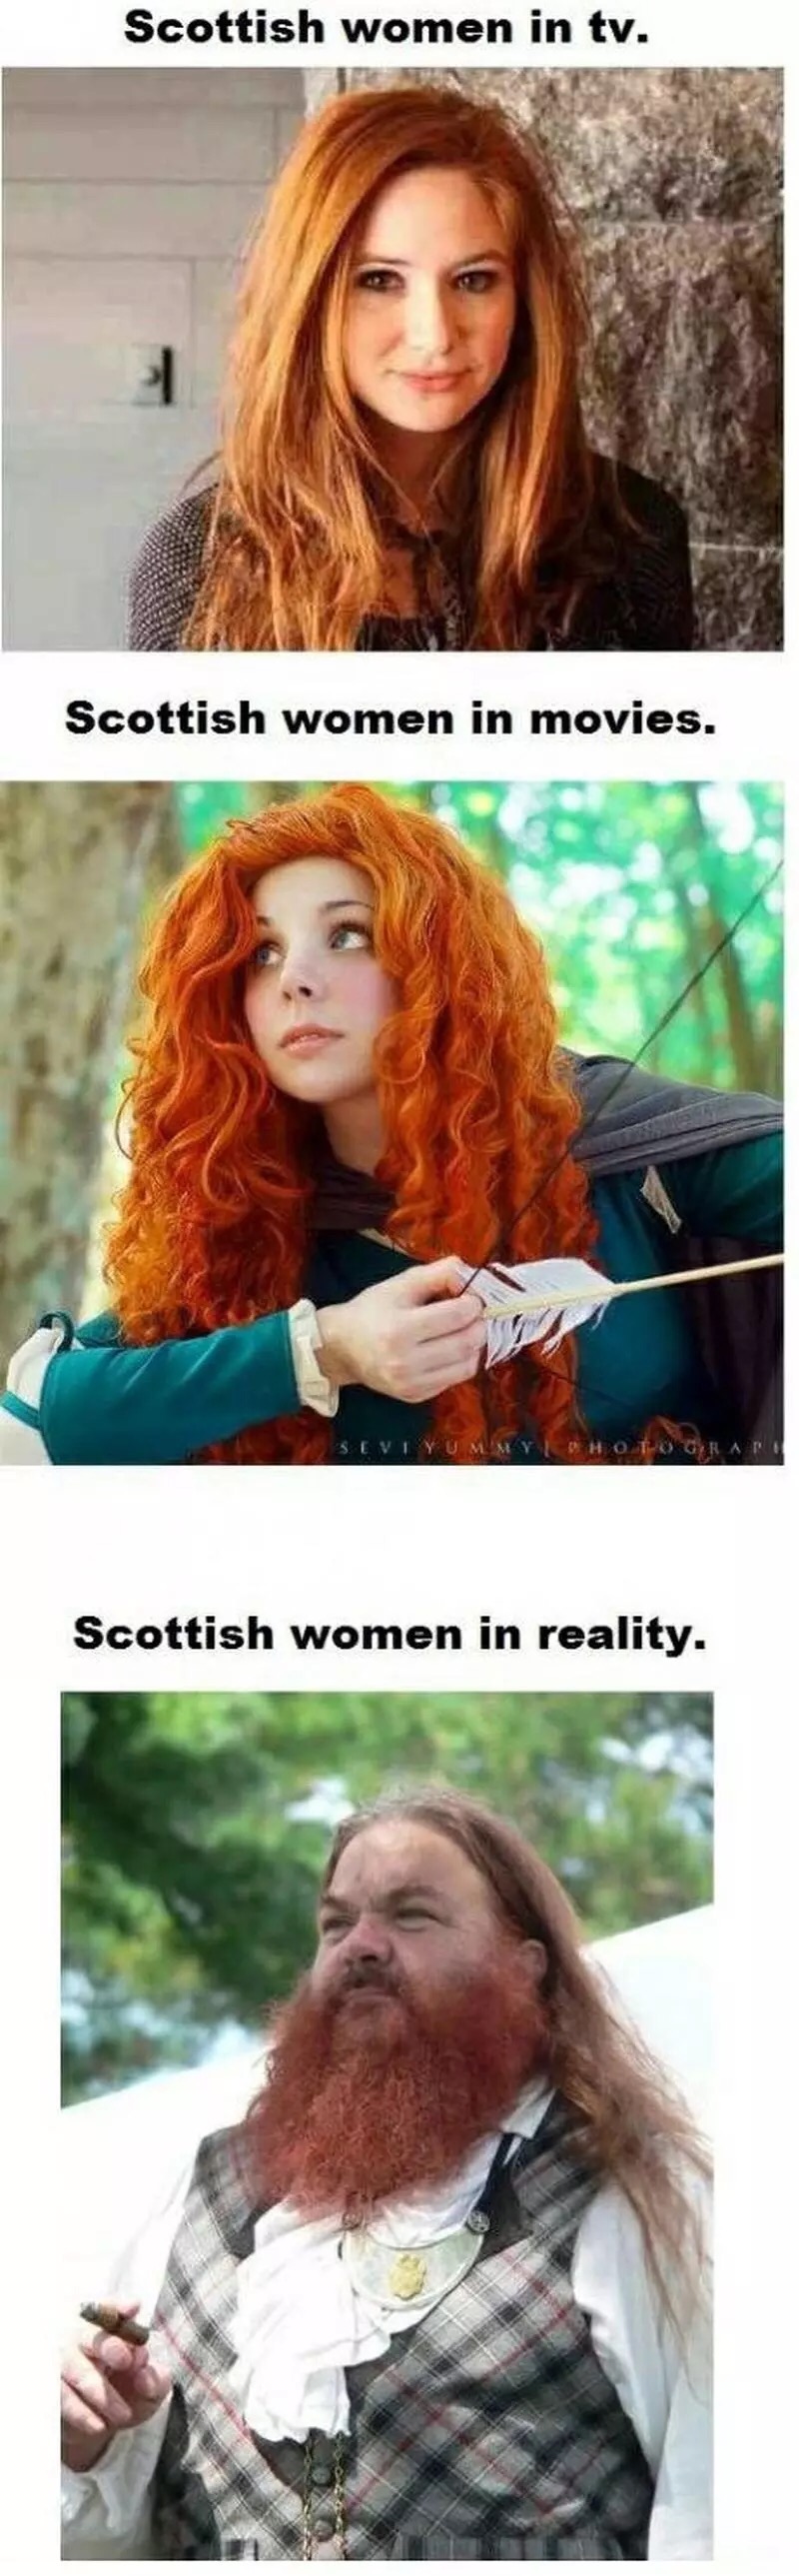 scottash women - Scottish women in tv. Scottish women in movies. Evtyummy Do Scottish women in reality.